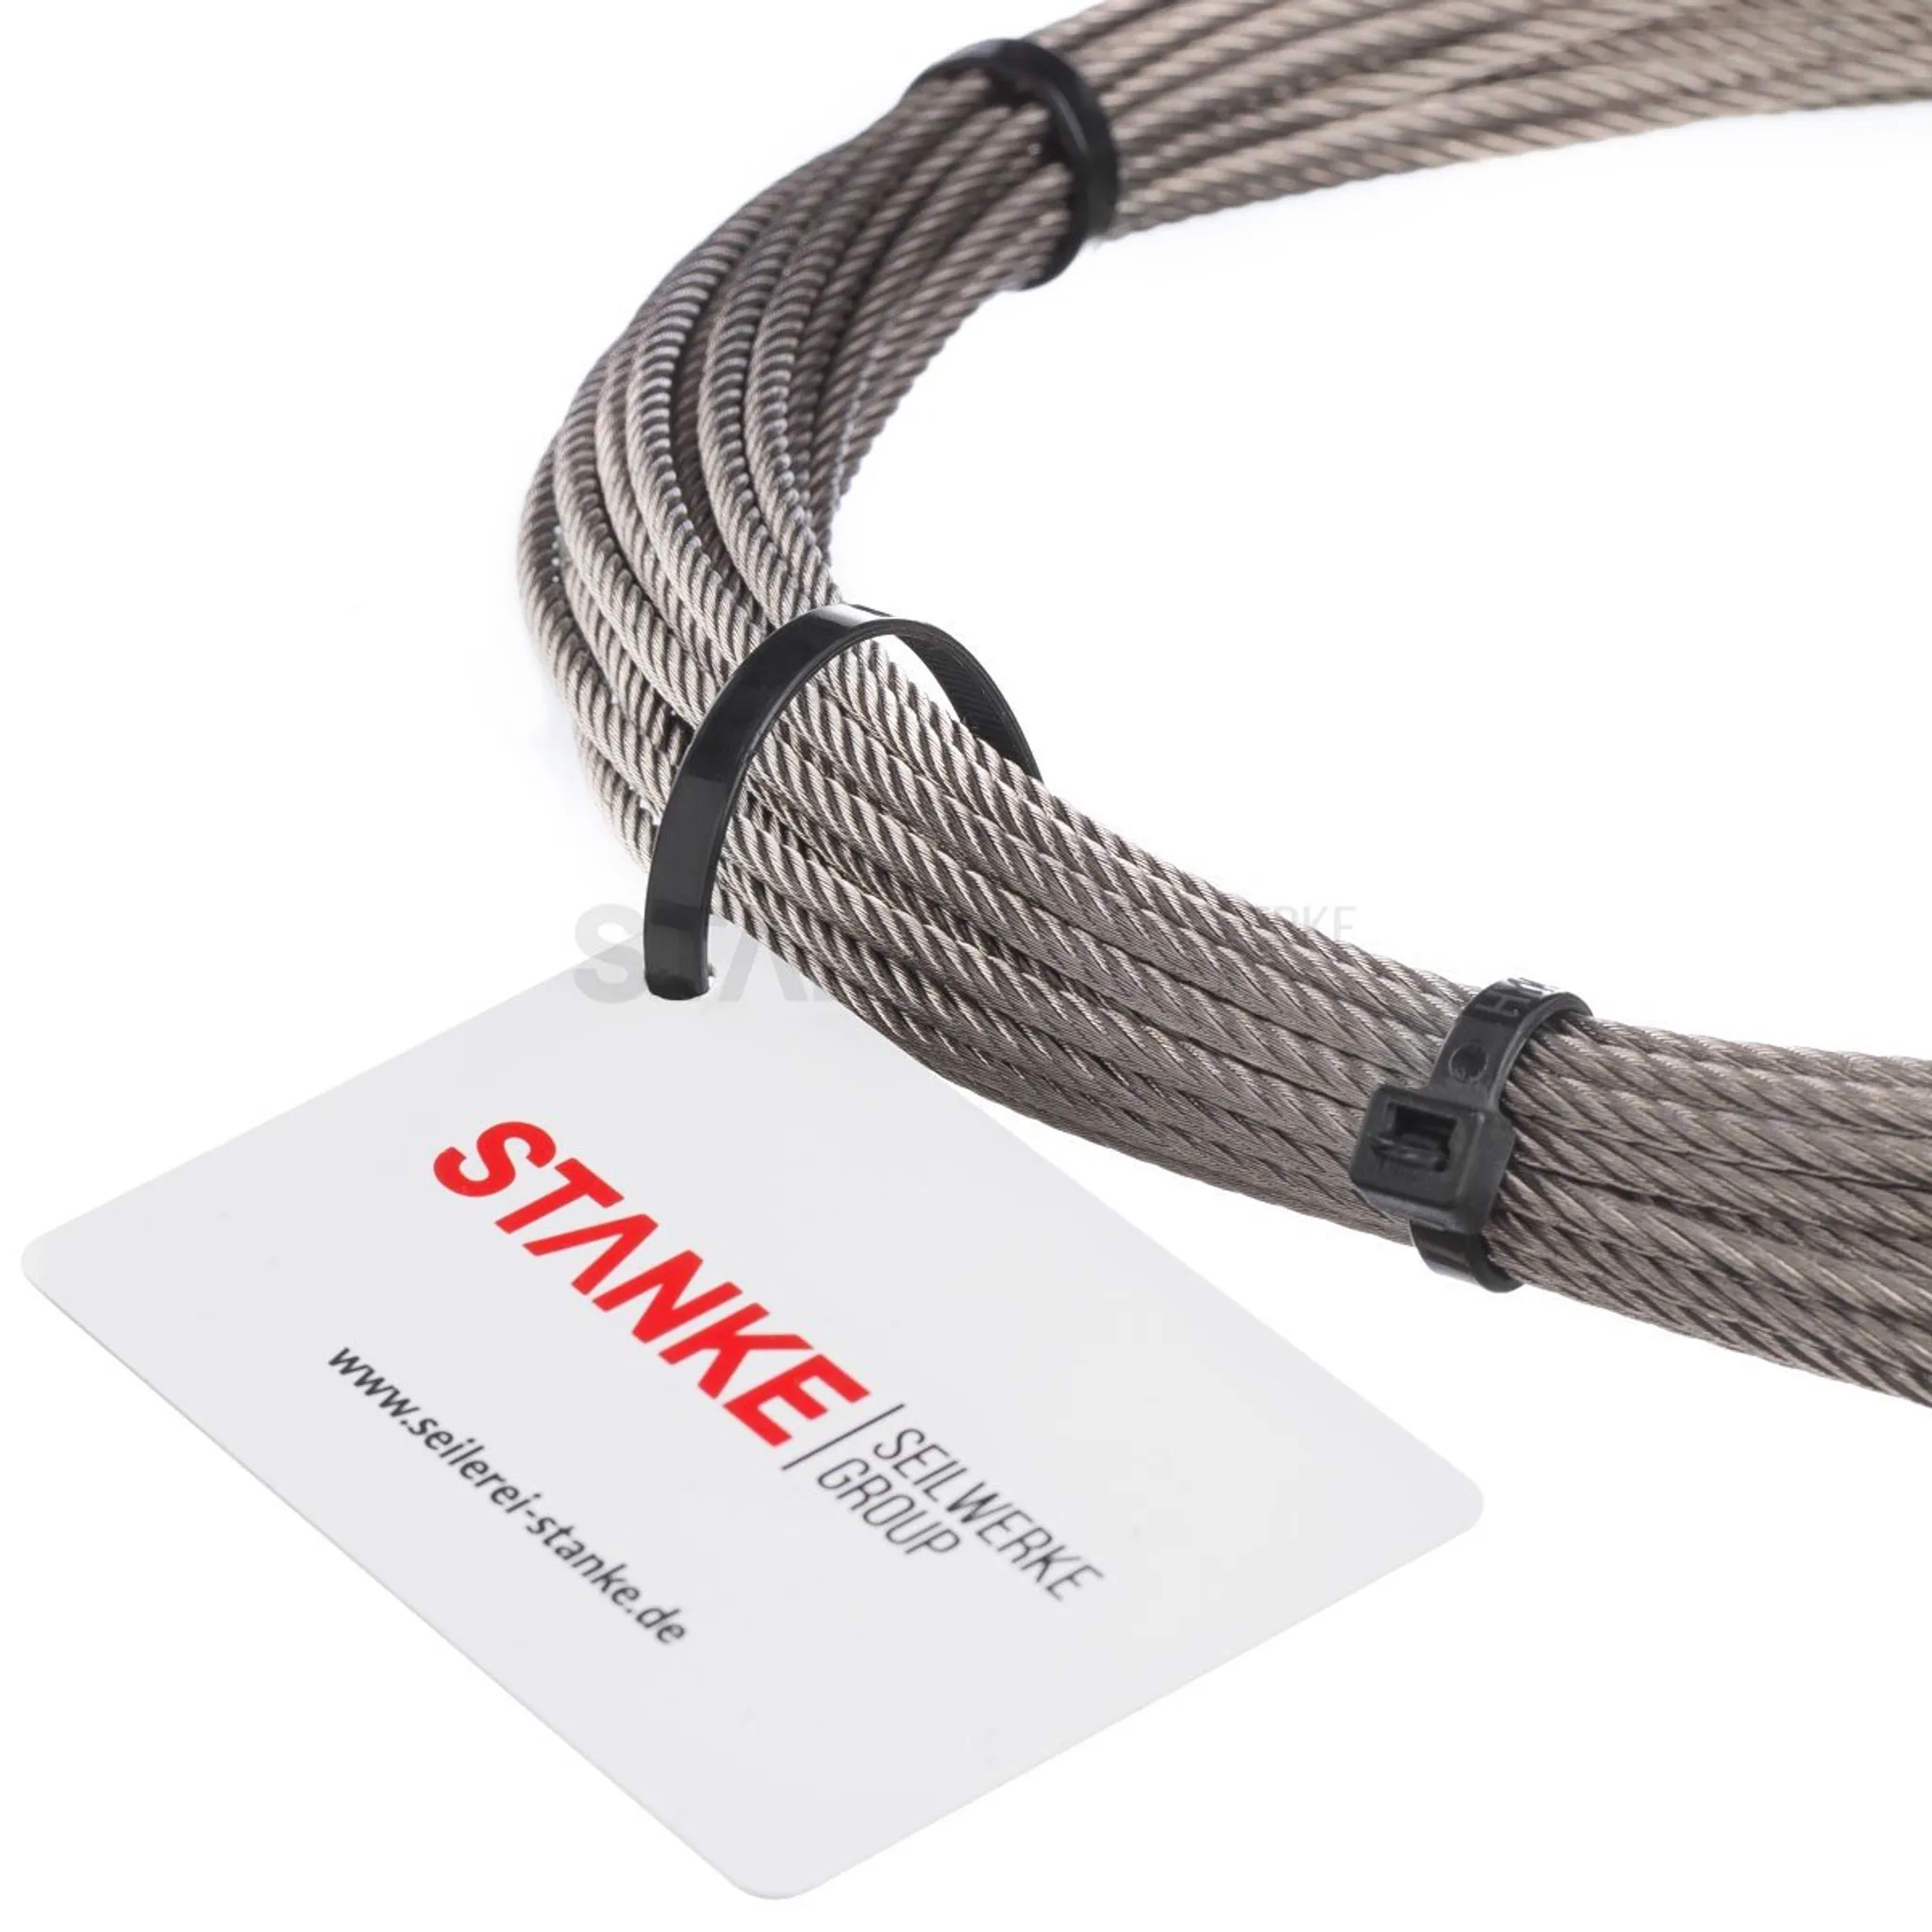 Seilwerk STANKE 5m Drahtseil 1,5mm 1x19 verzinkt Stahlseil Forstseil Windenseil Seil Draht Stahl 